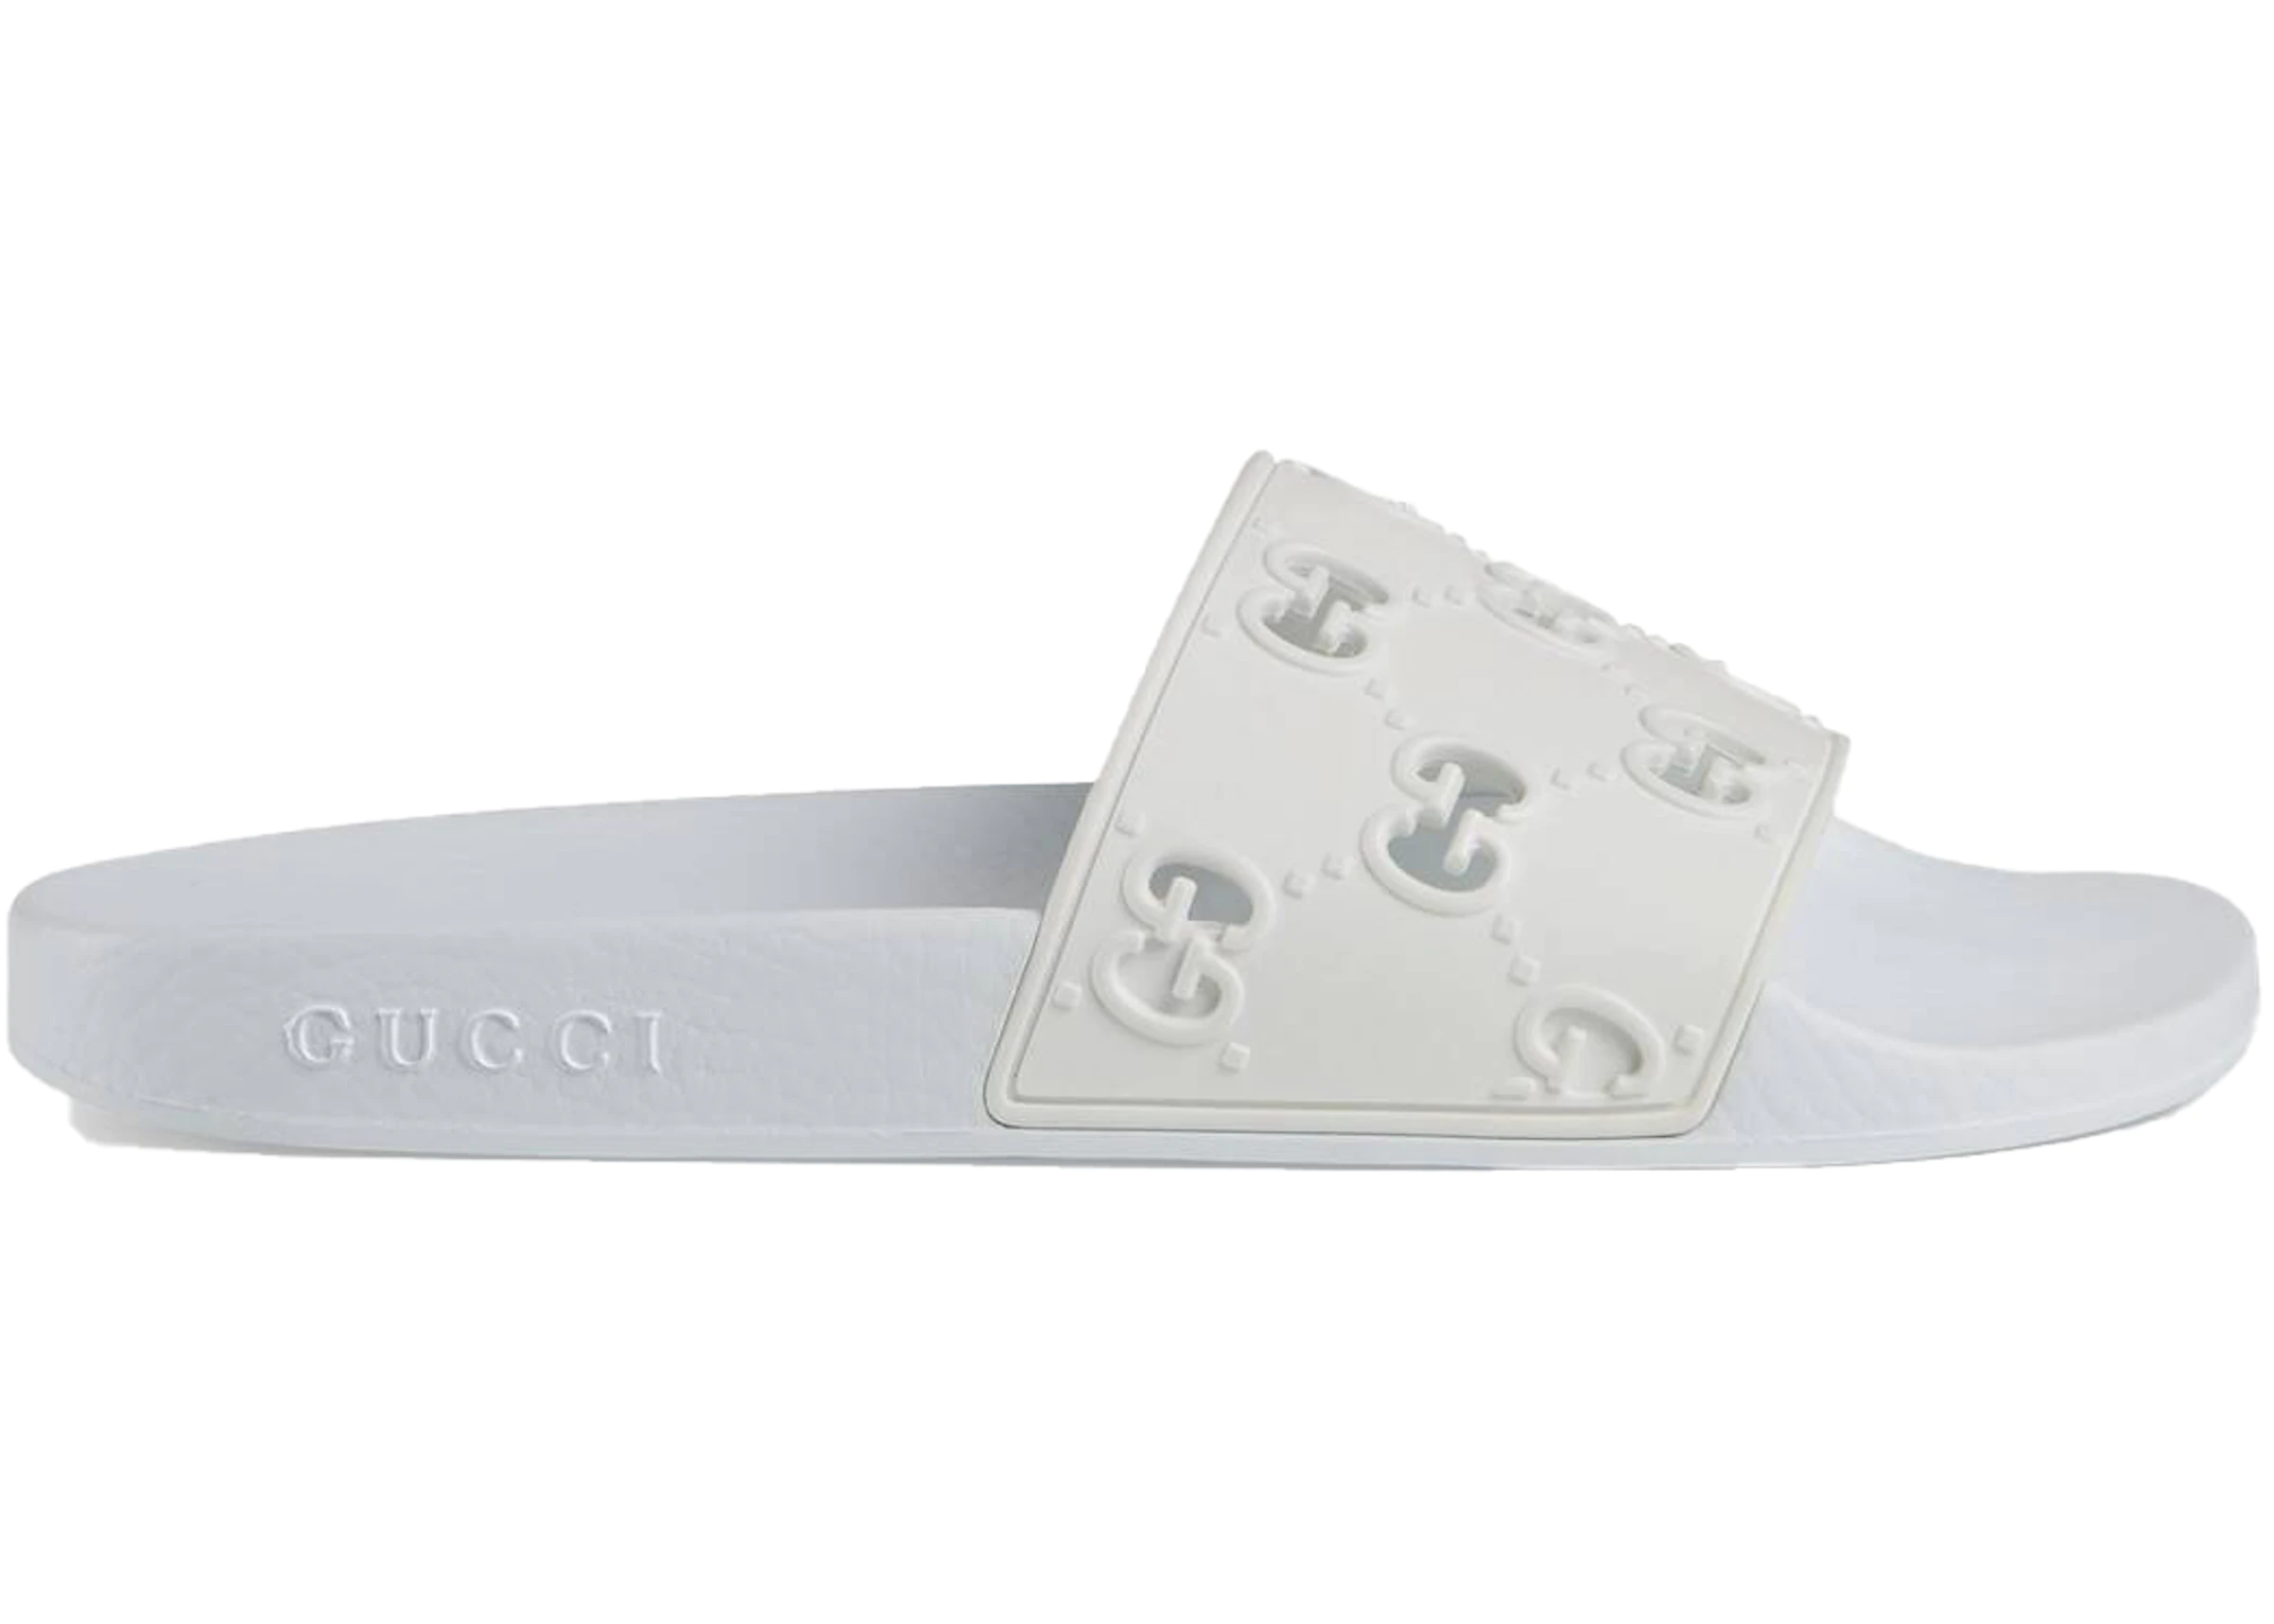 Gucci Slide White Rubber (W) - 573922 JDR00 9014 - US